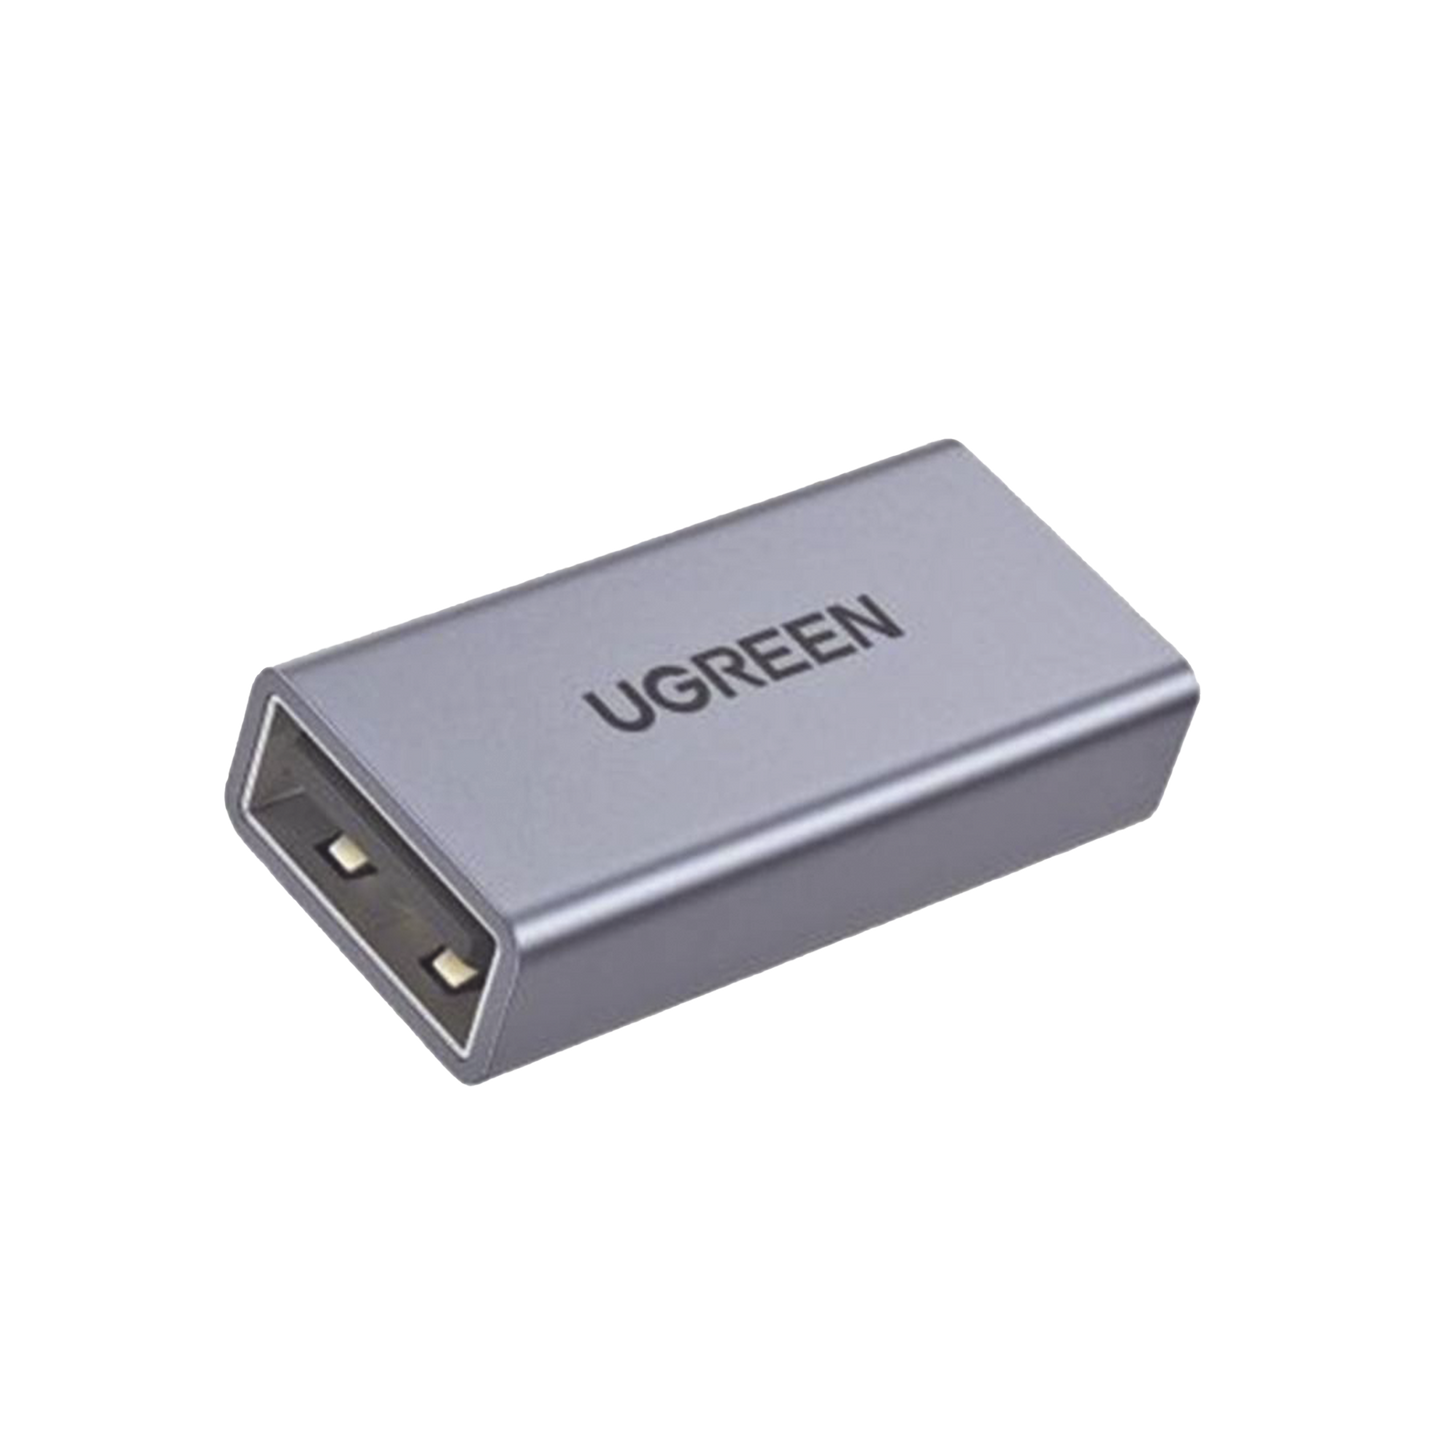 Adaptador USB-A hembra a USB-A hembra / USB 3.0 / Velocidades de Transferencia de Datos de hasta 5 Gbps / Carcasa de Aluminio / Compacto y Portátil / Plug & Play / Compatible con versiones anteriores de USB.